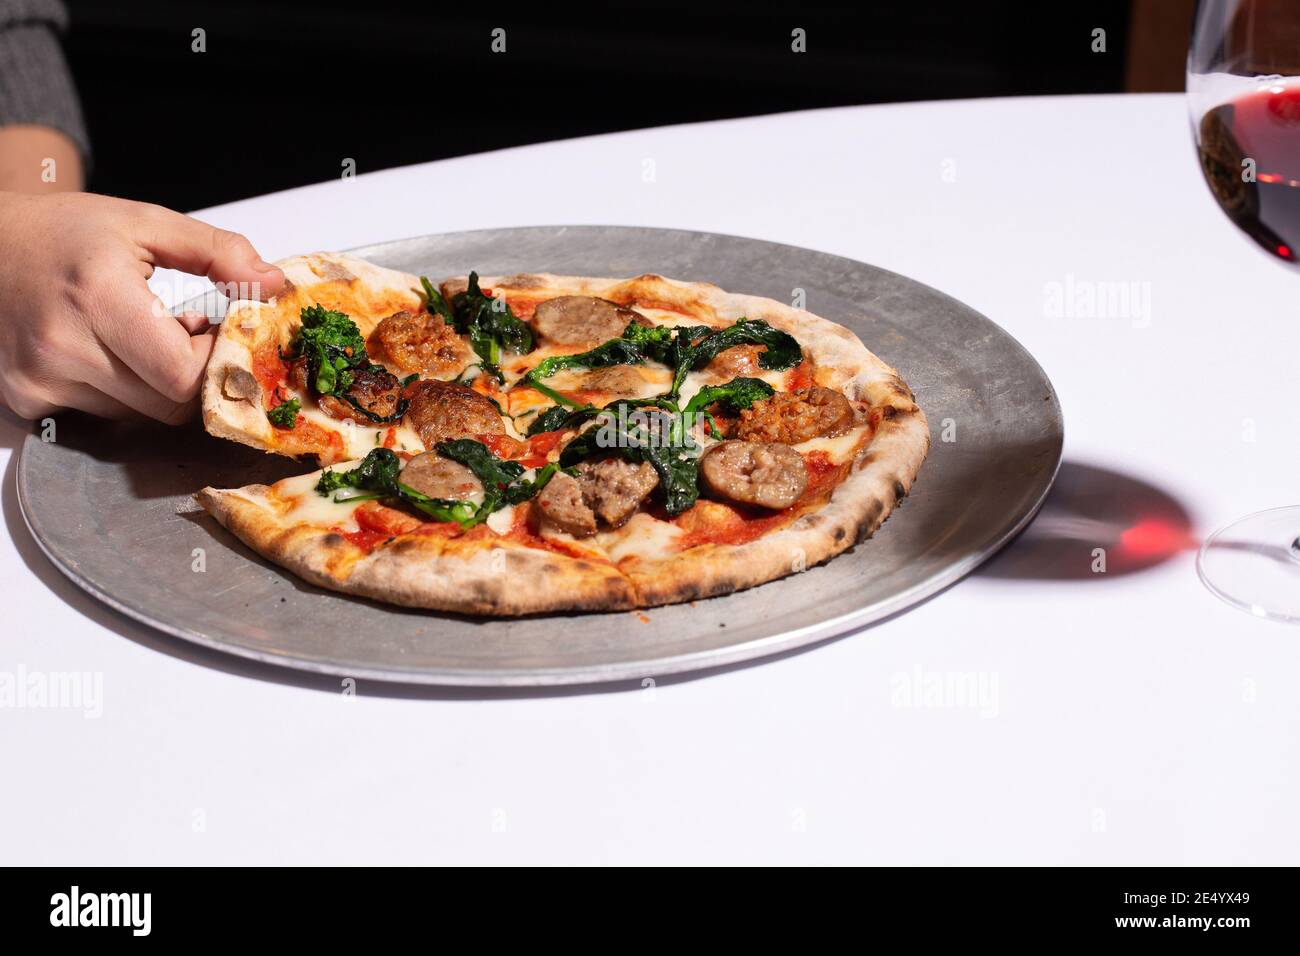 Hand grabbing Slice of Brick Oven Pizza with Sausage and Broccoli Raab Stock Photo